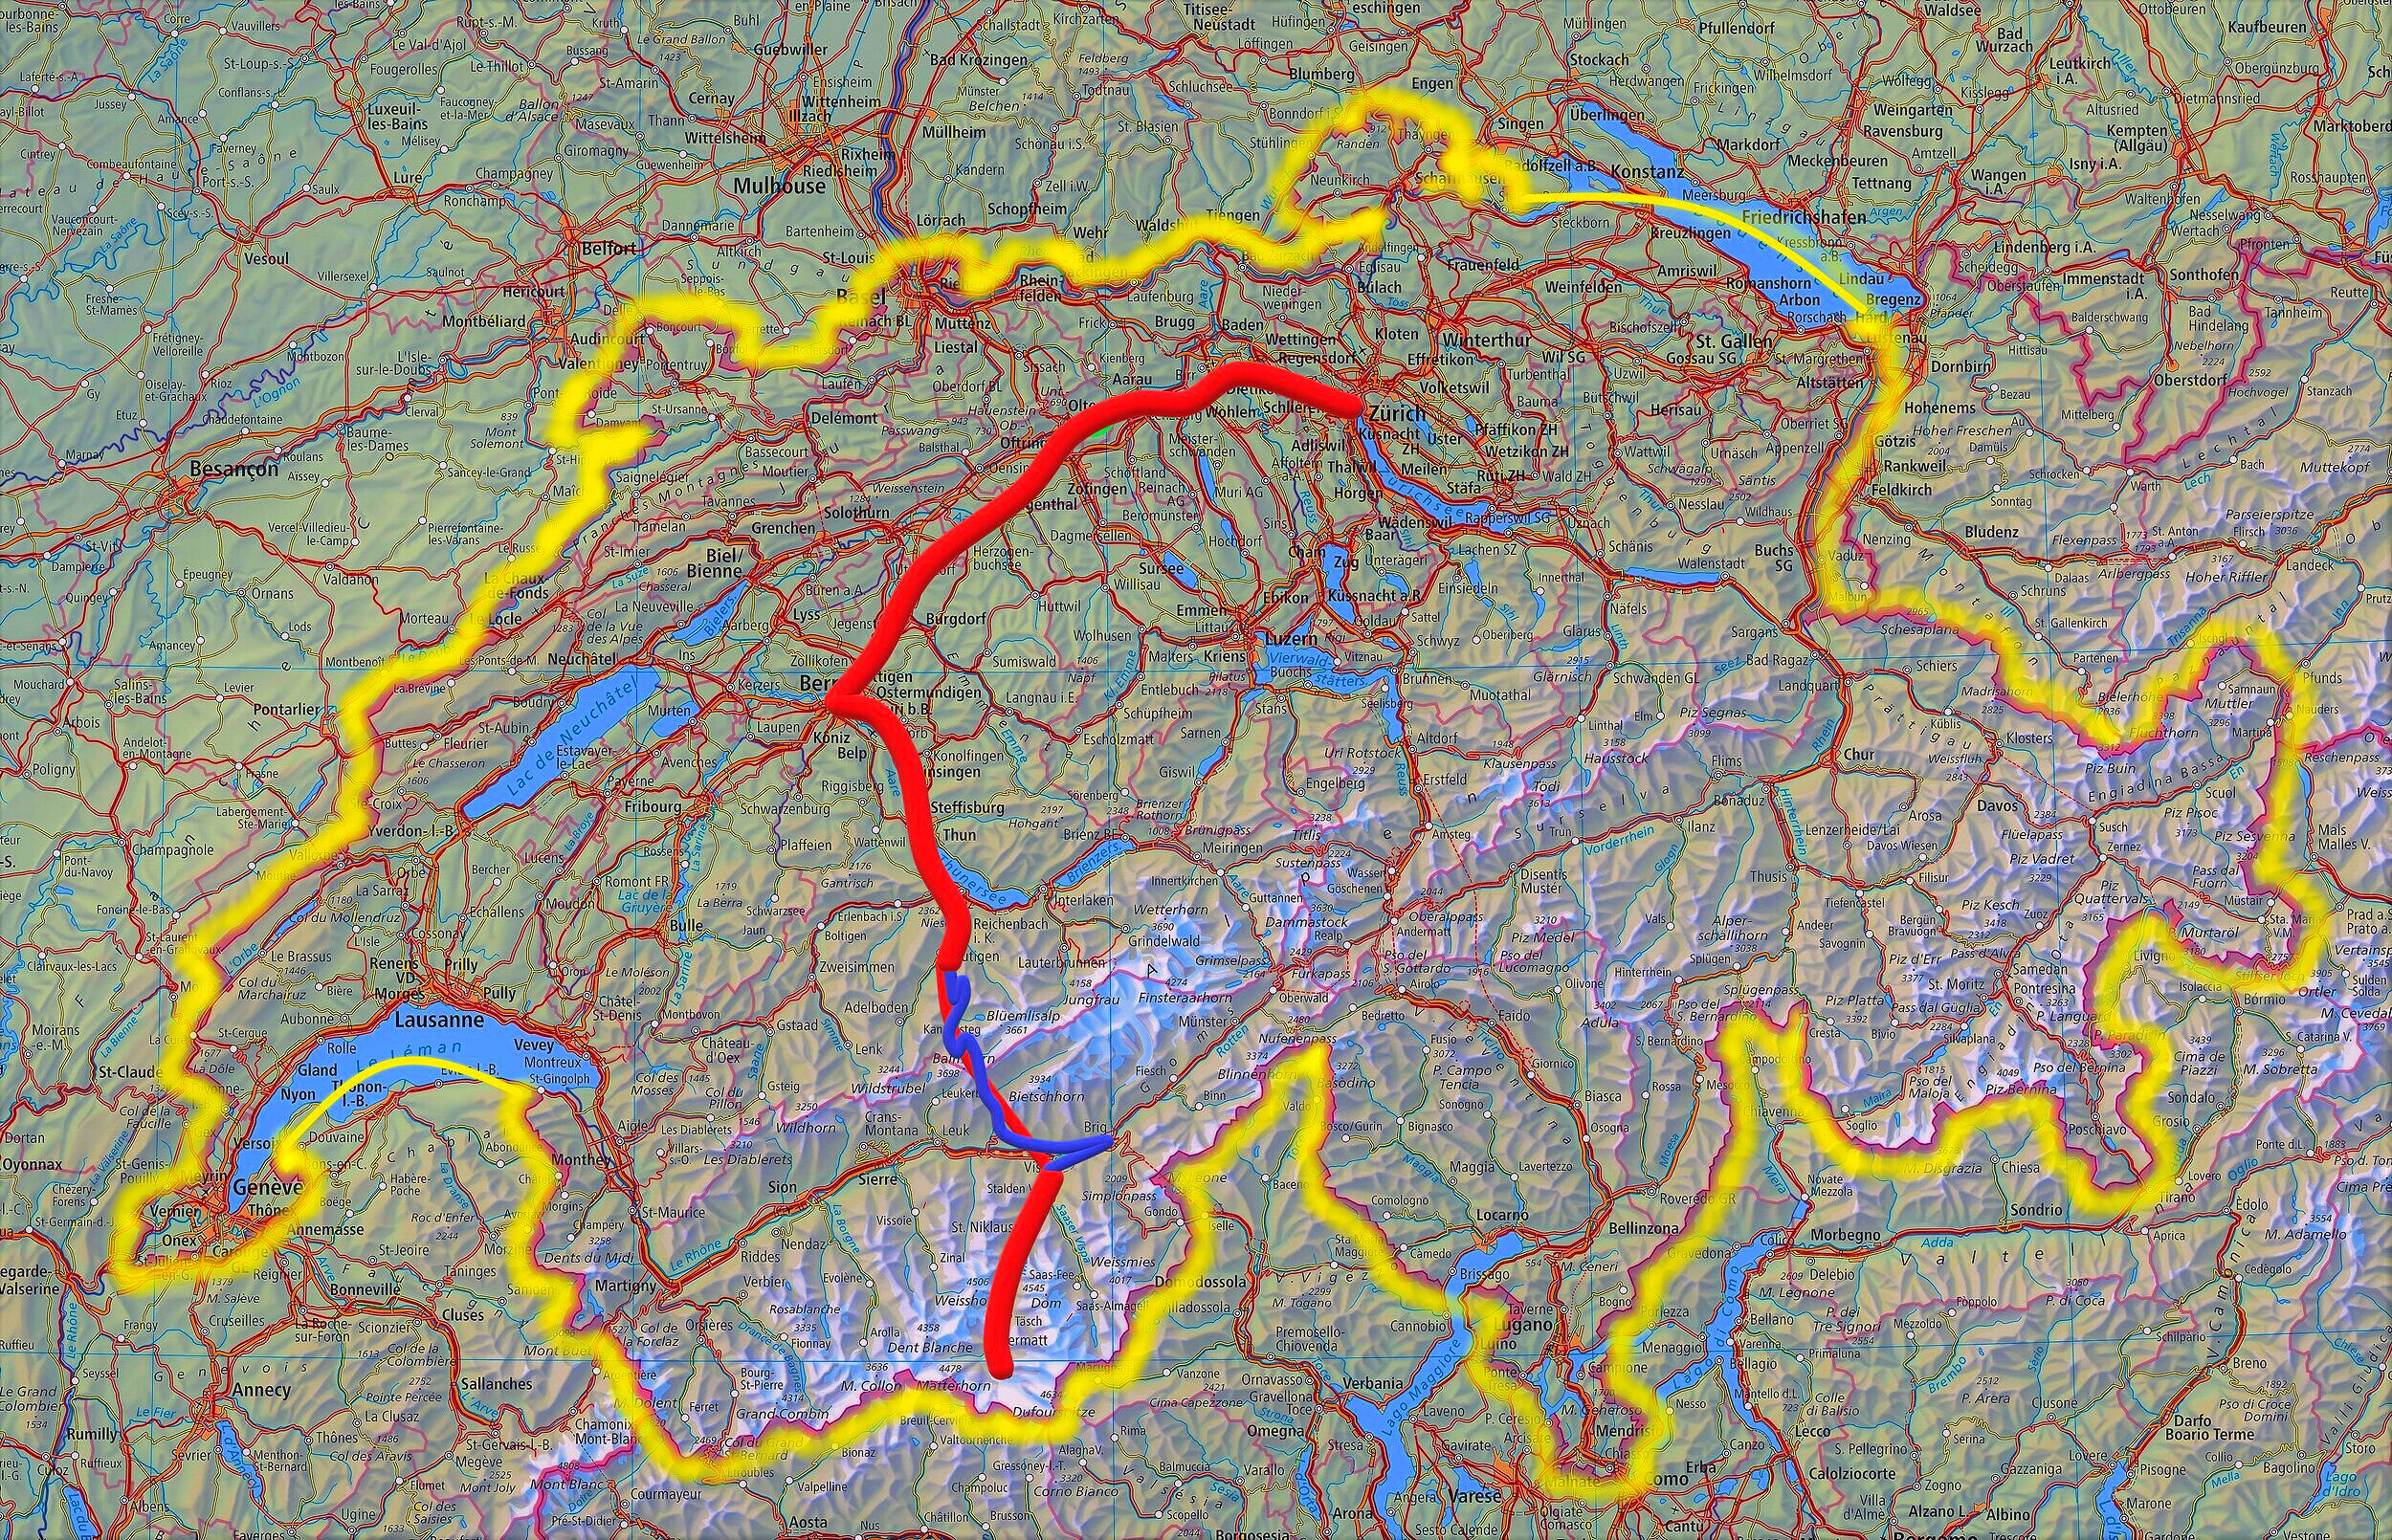 Travel route from Zurich to Zermatt &amp; Gornergrat by train.Source (map): Swiss Federal Office of Topography swisstopo